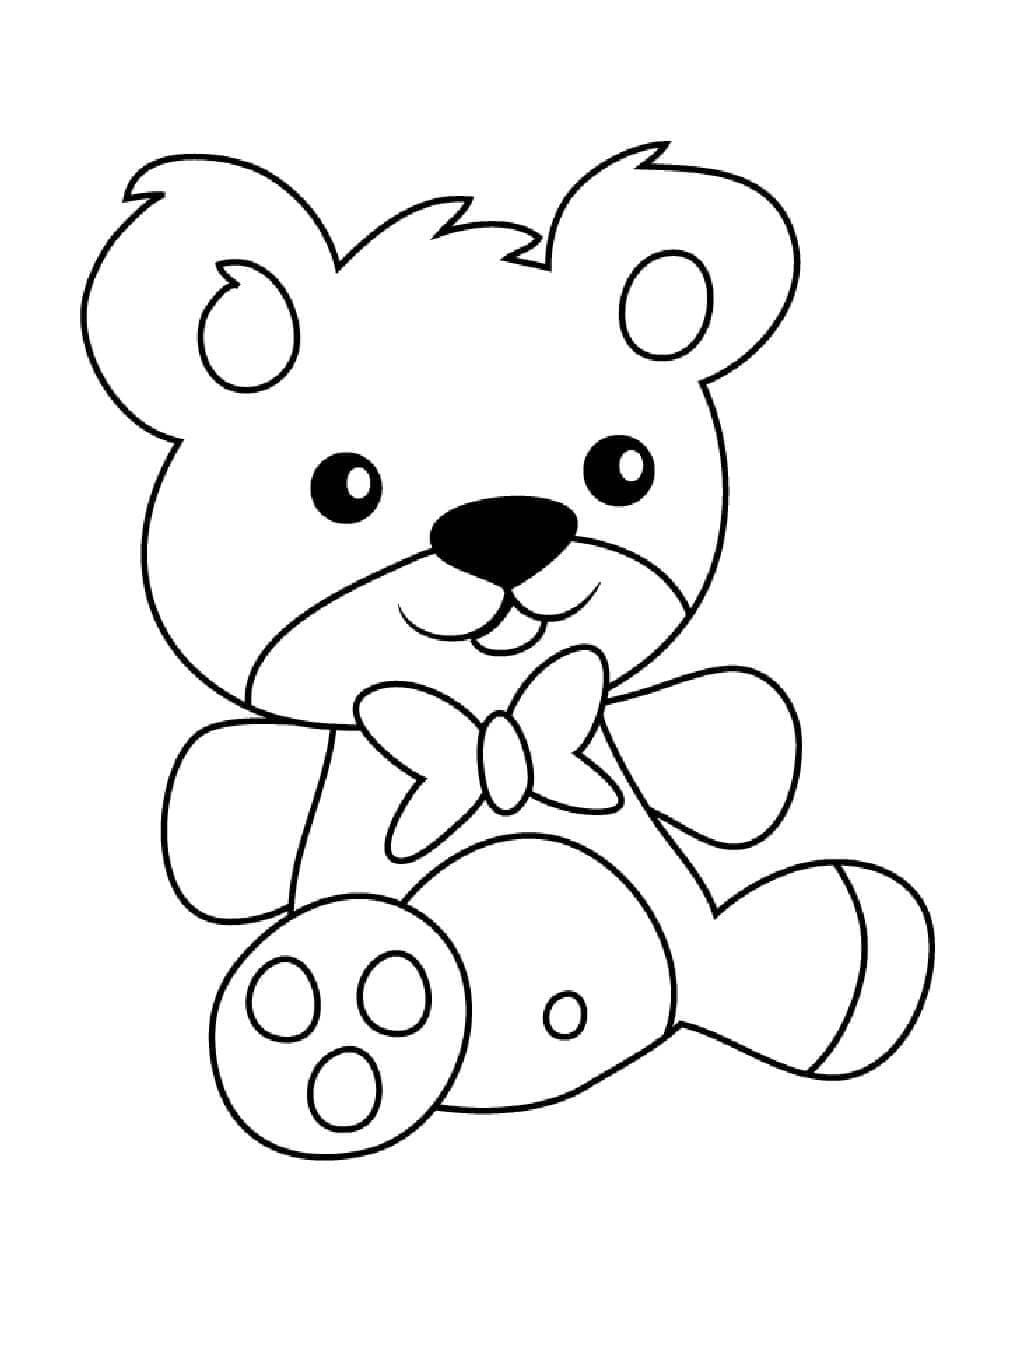 Printable Fun Teddy Bear Coloring Page